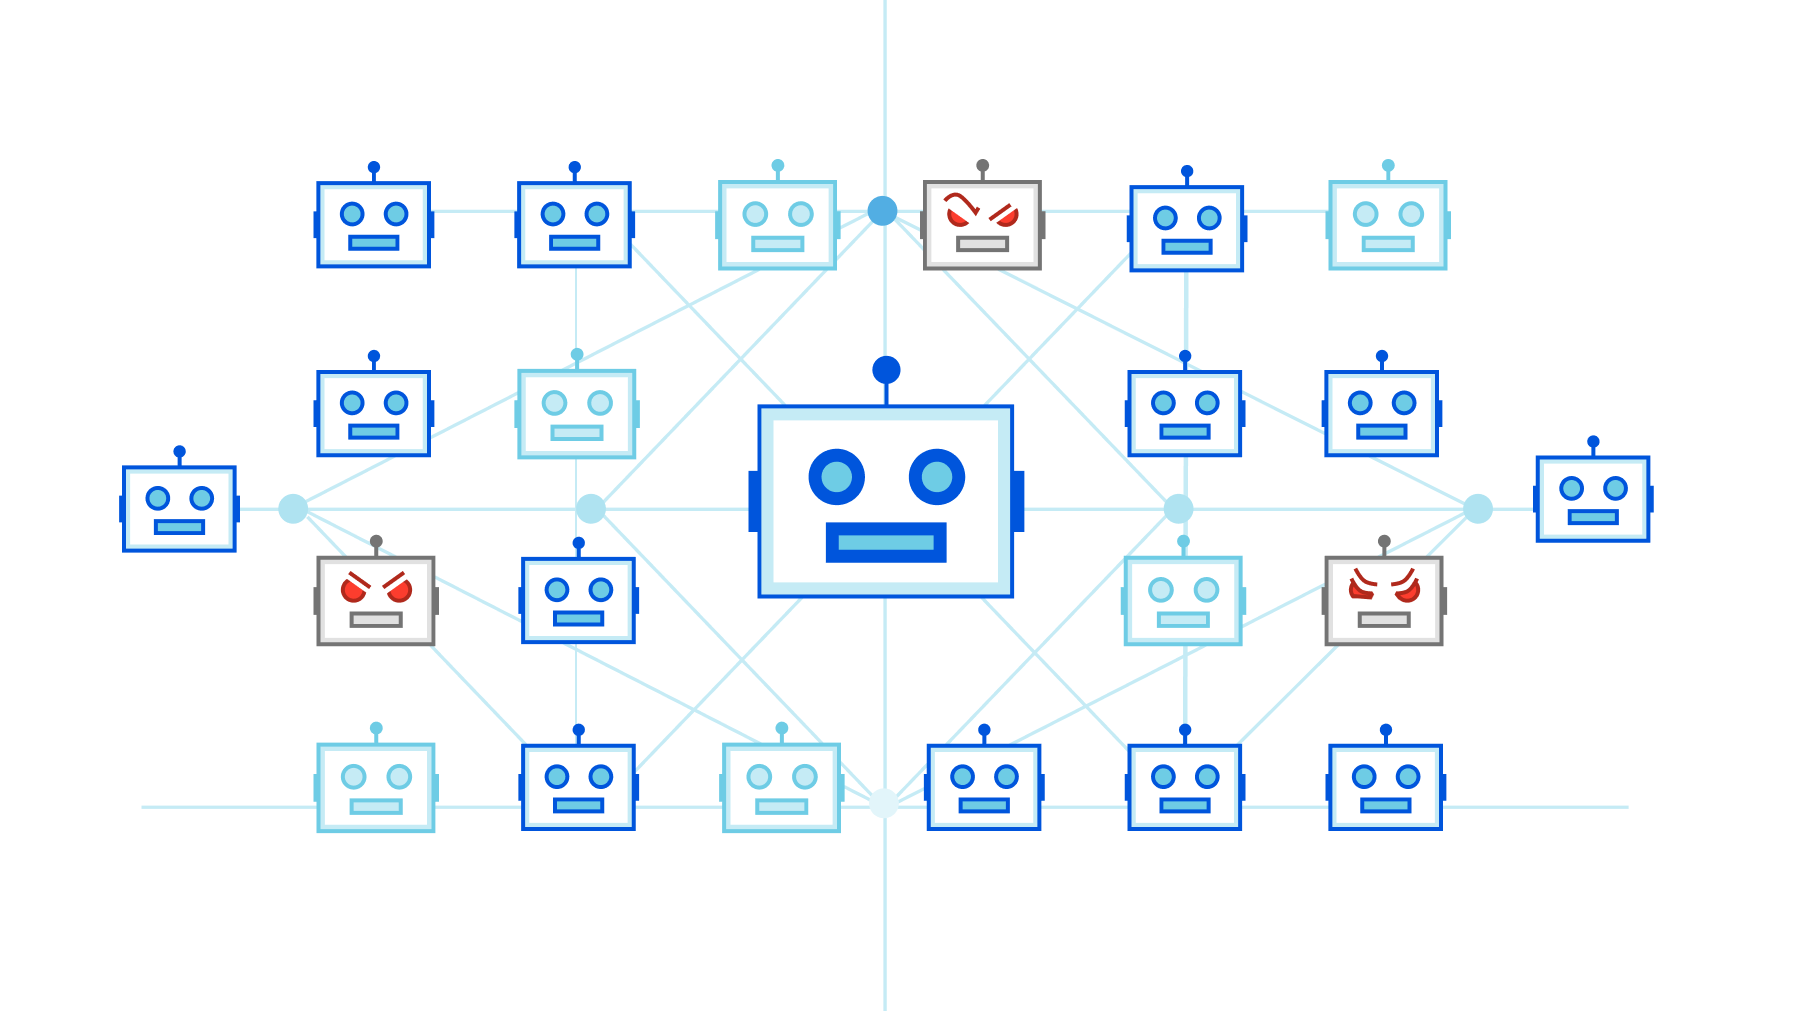 Botnetz – vernetzte böswillige Bots